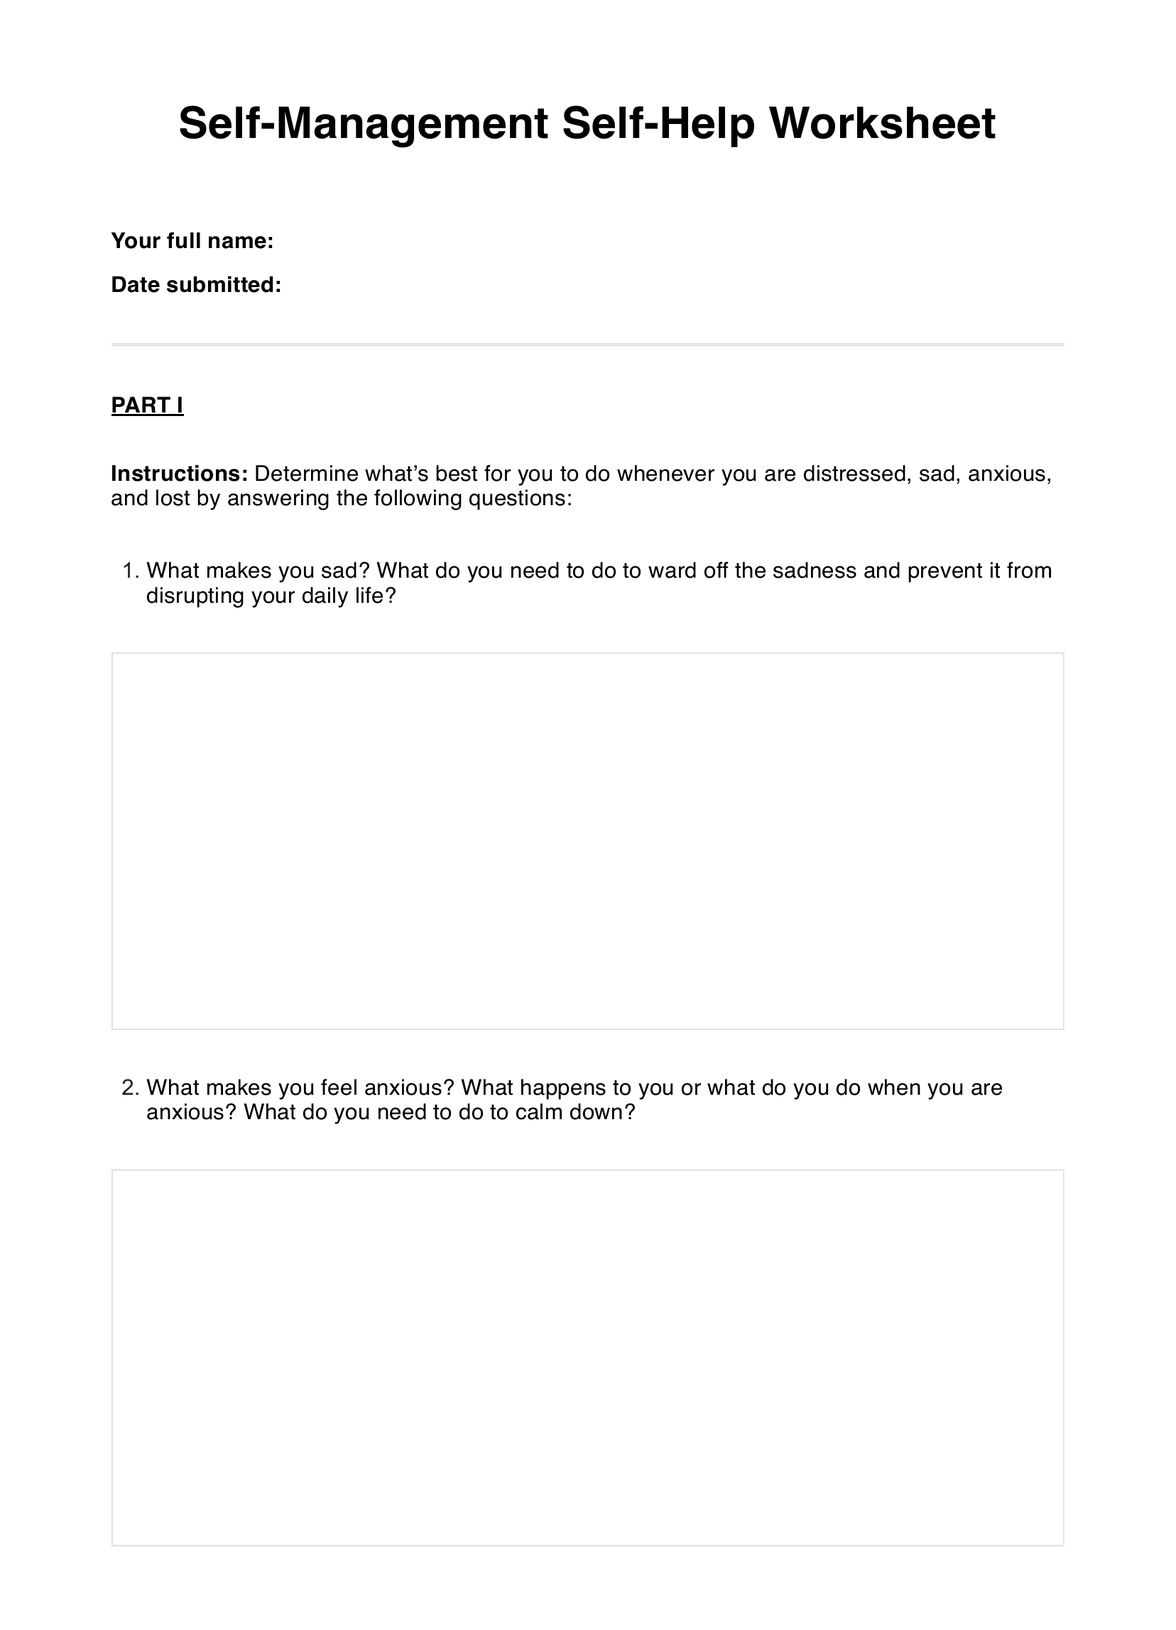 Self-Management Self-Help Worksheet PDF Example